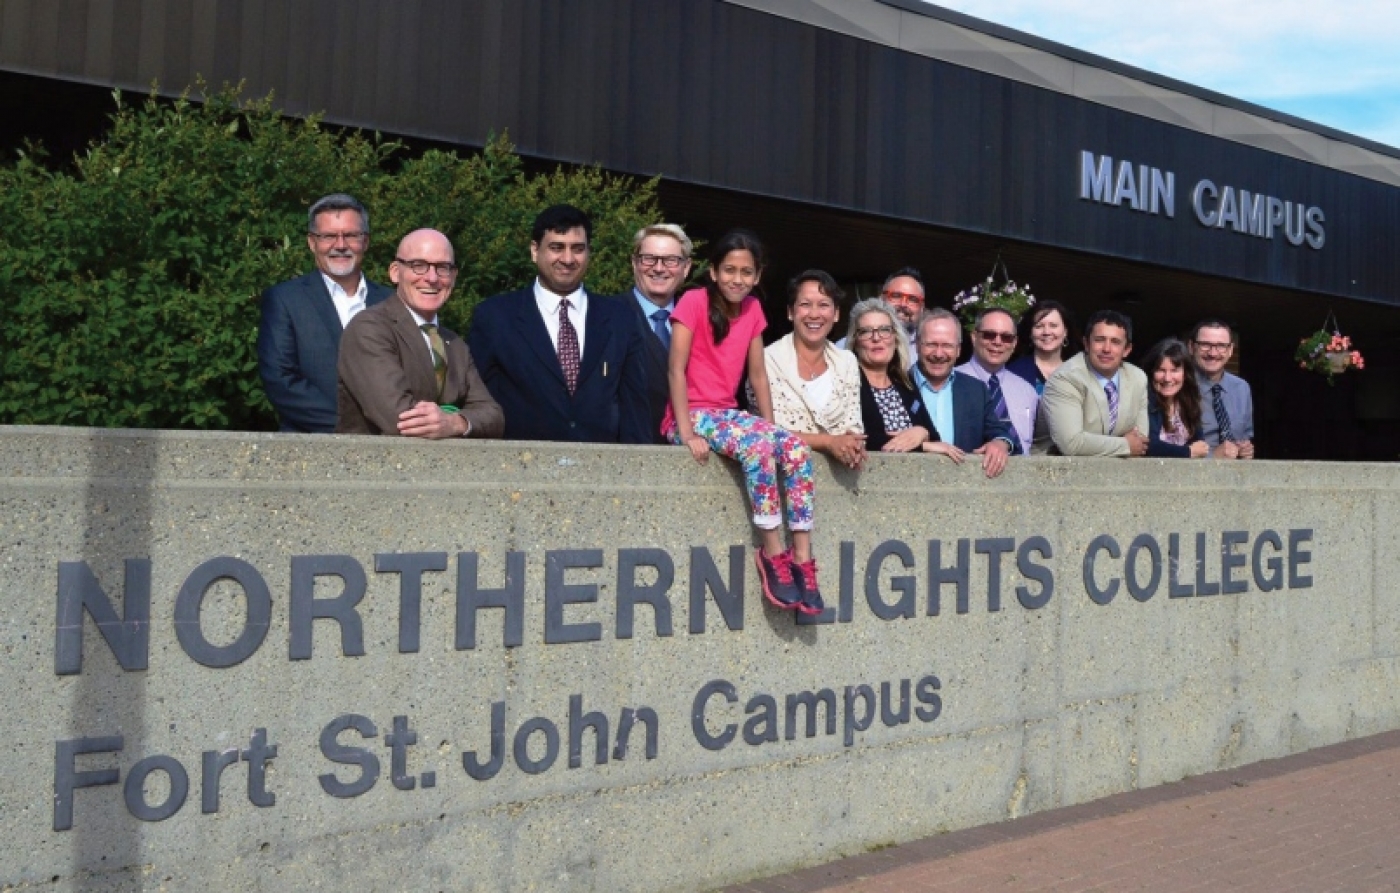 Northern Lights College - Fort St. John Campus